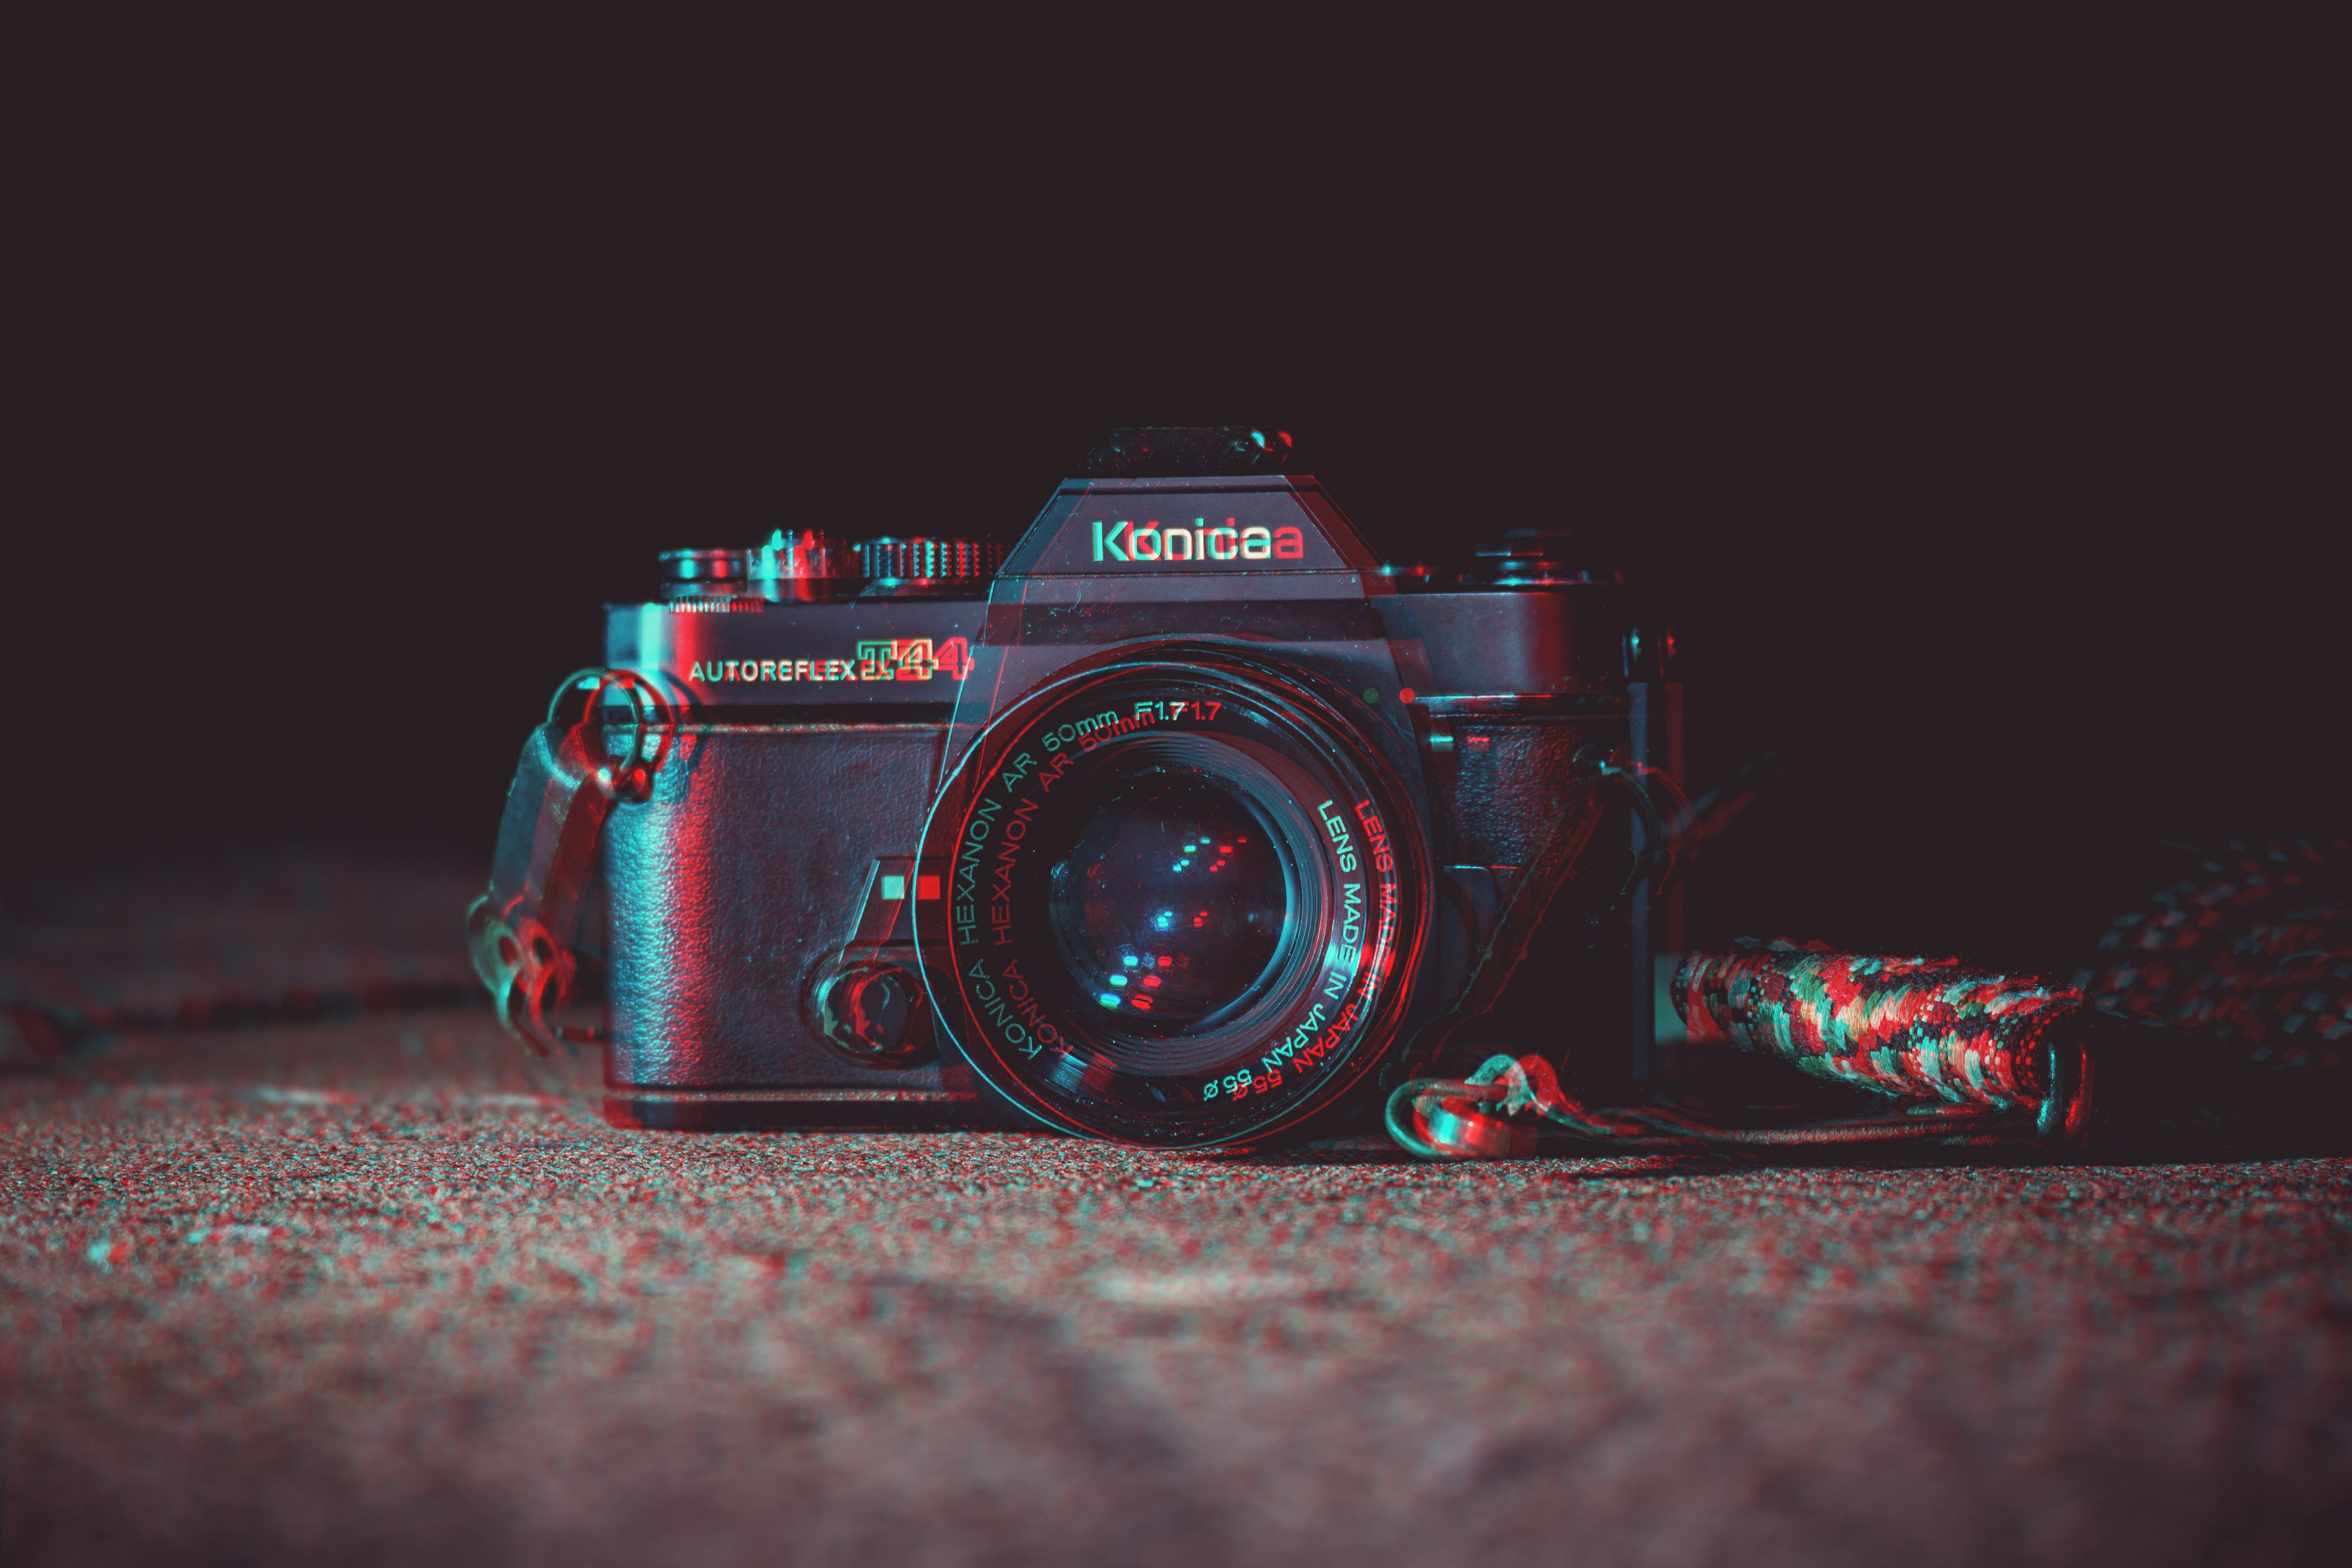 shallow focus photography of black Konica DSLR camera